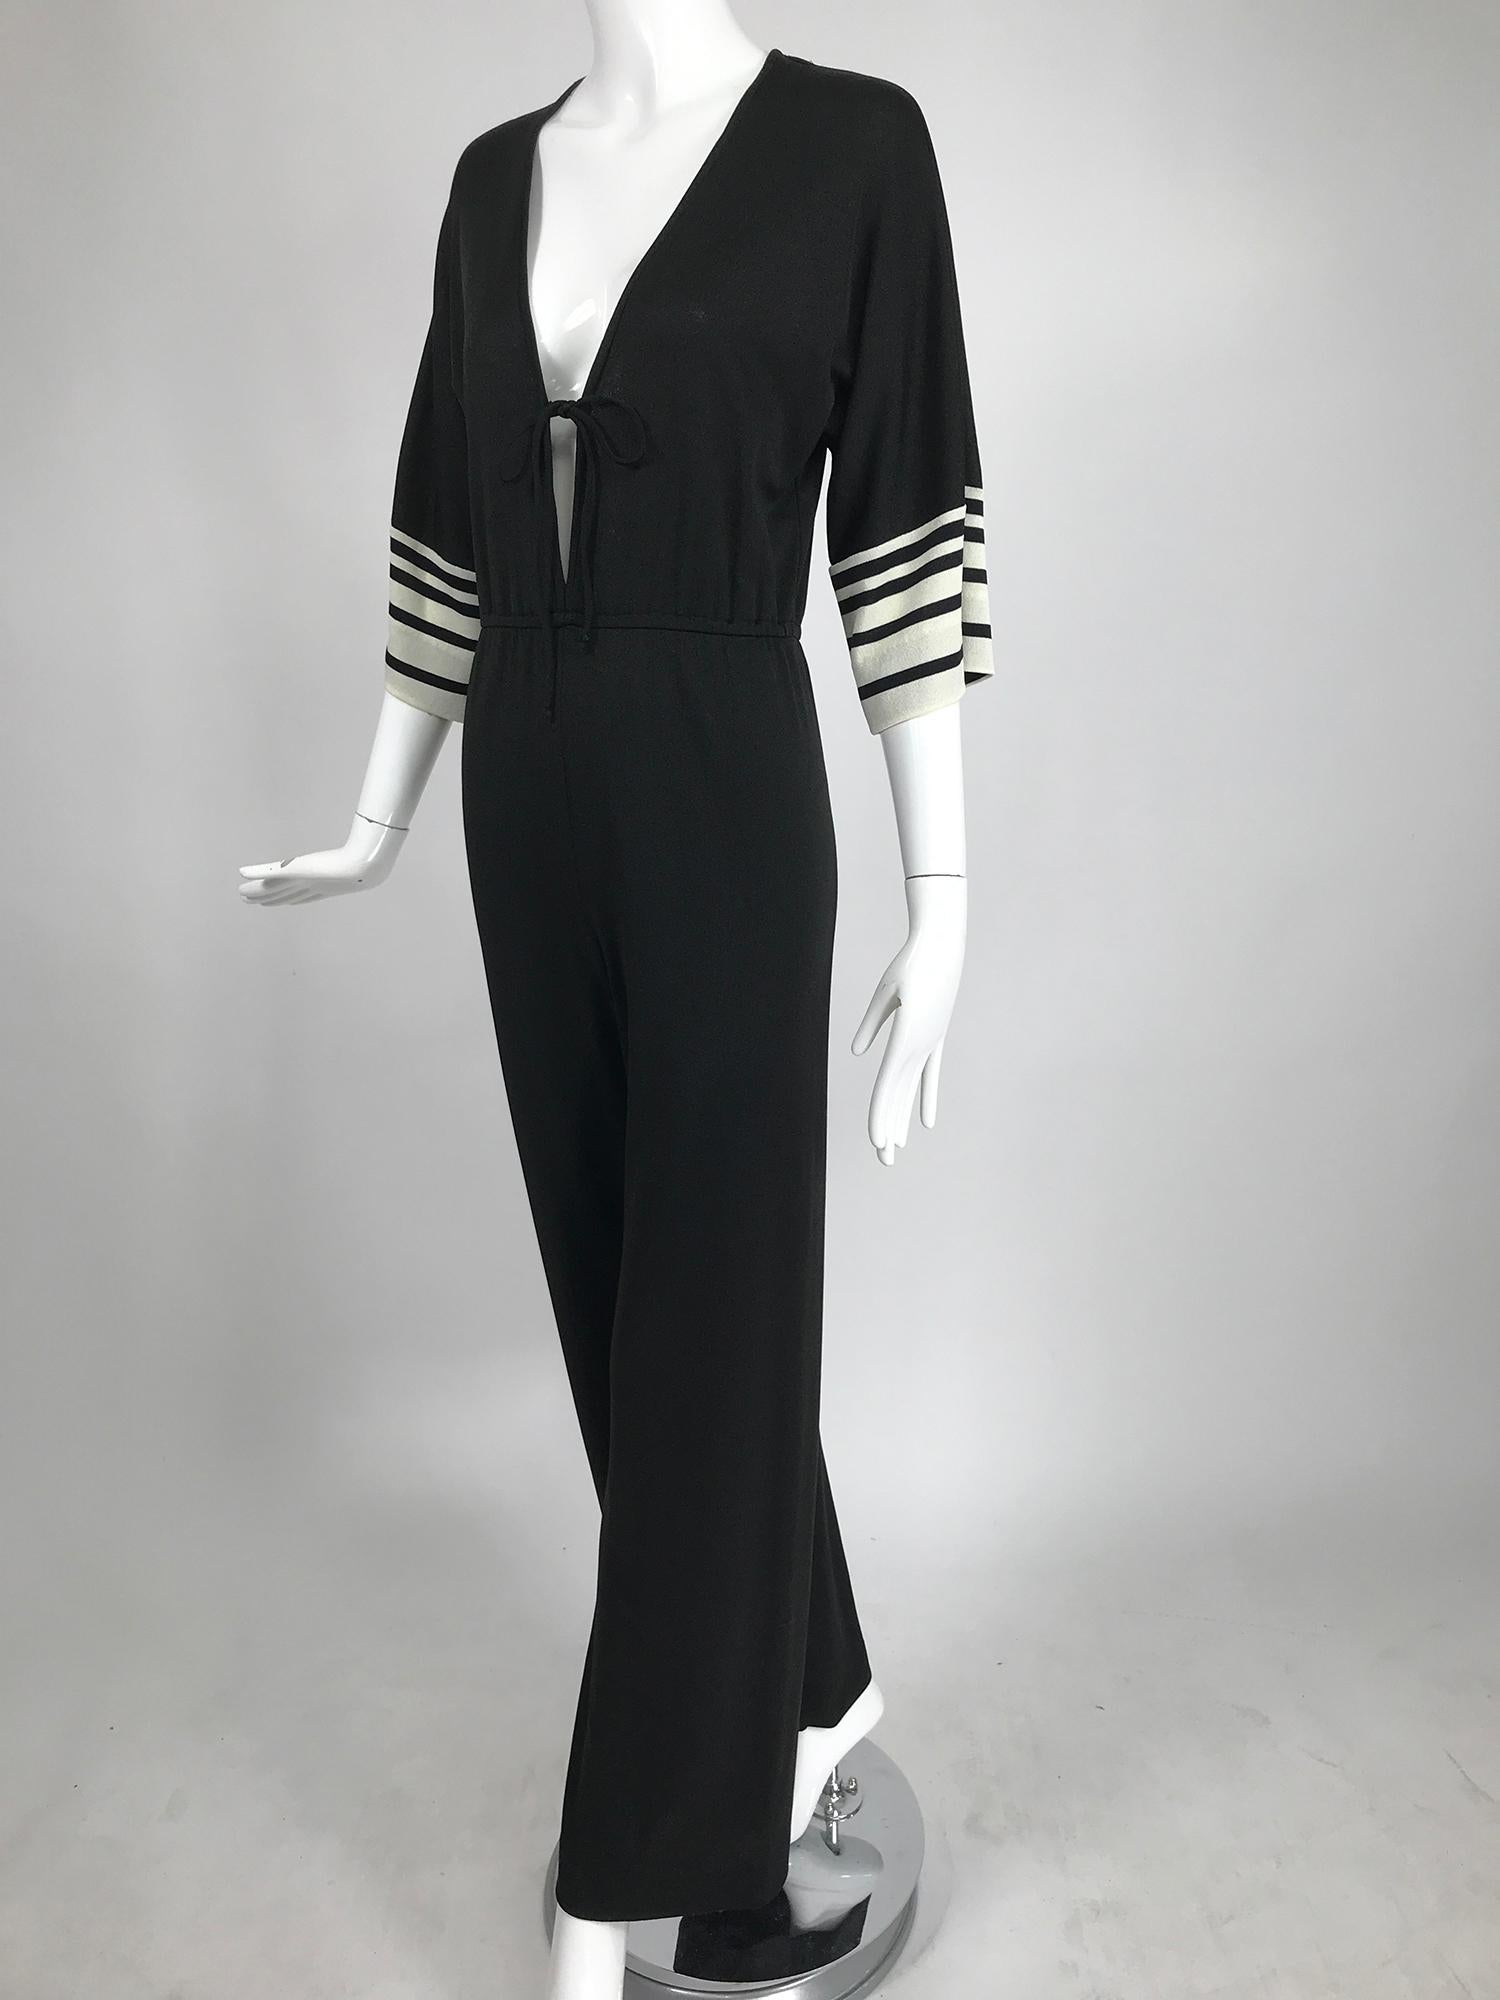 Vintage Clovis Ruffin Ruffinwear Black and White Jumpsuit 1970s 3